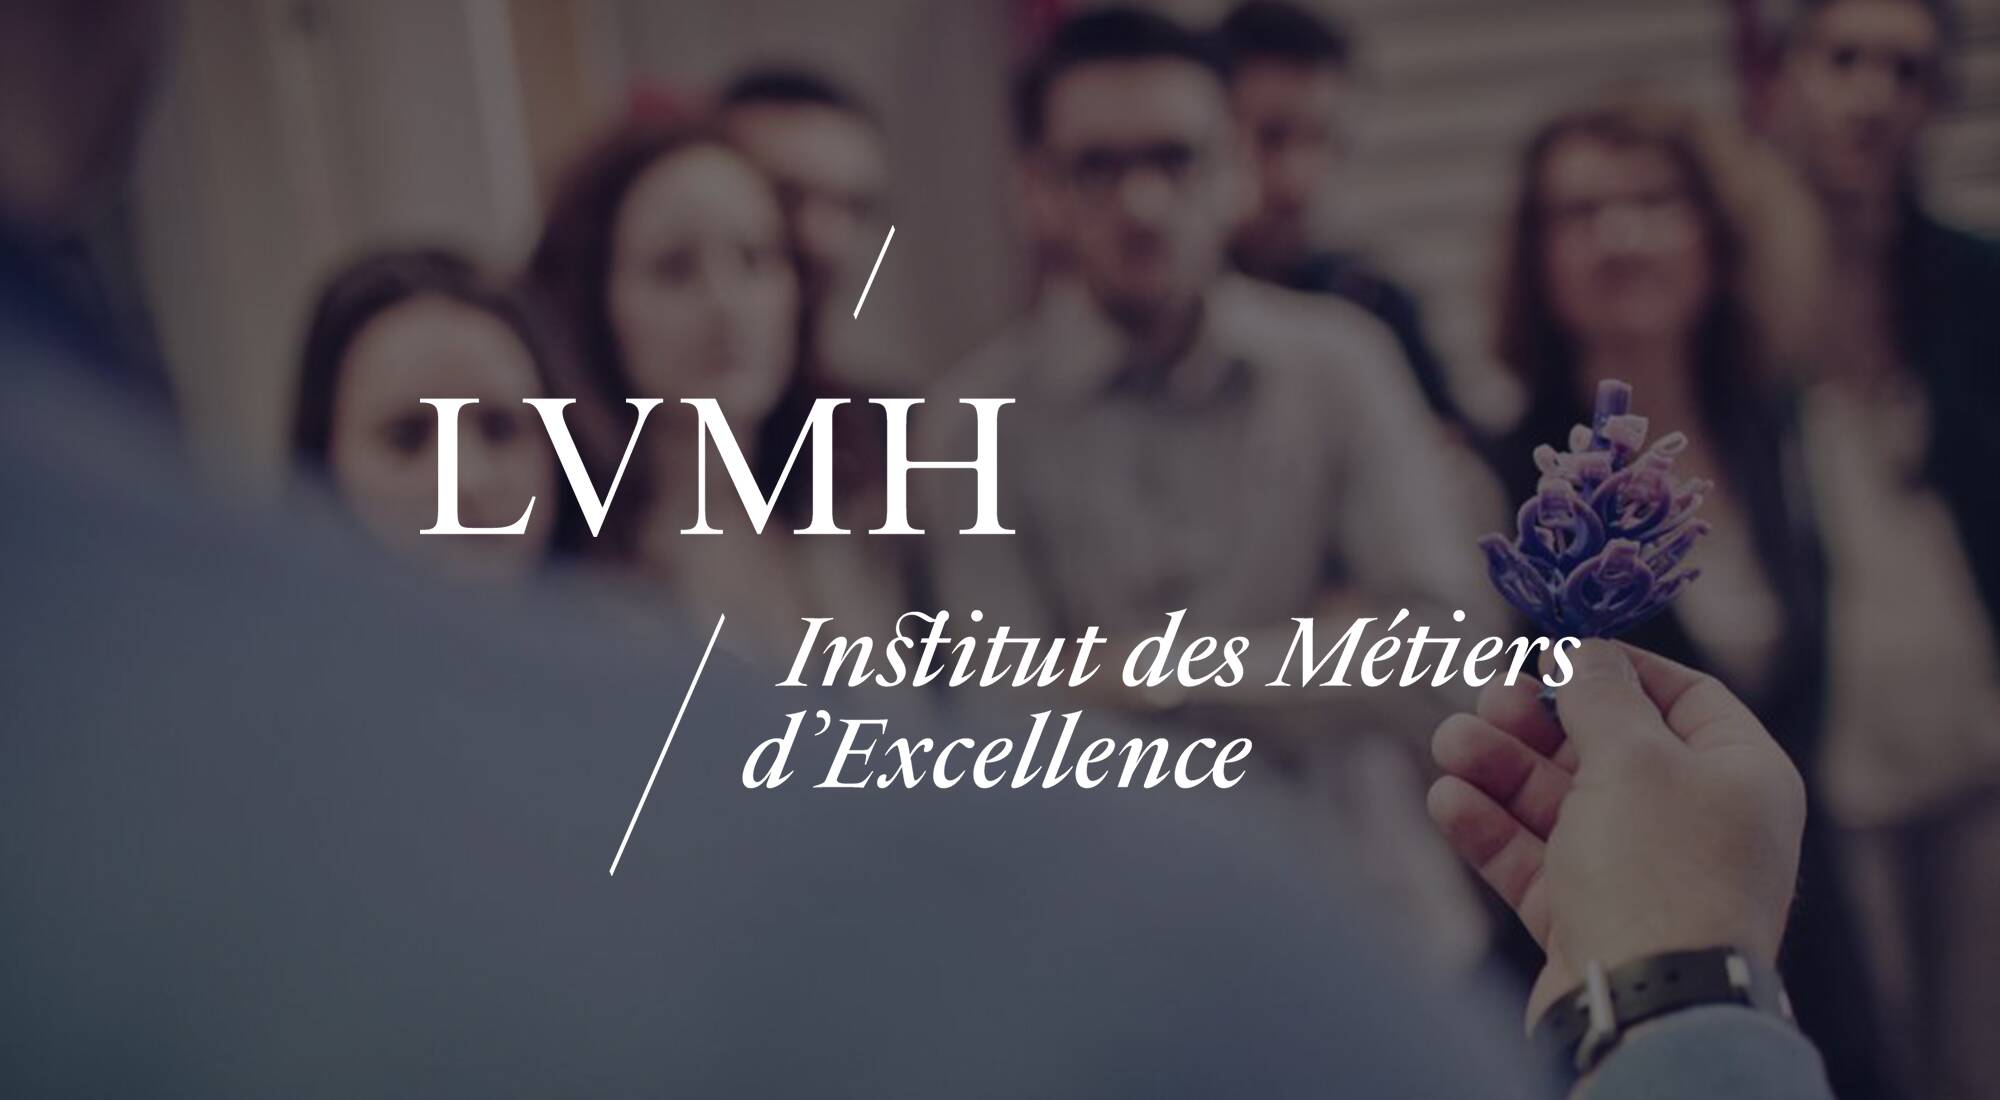 LVMH Institut des Métiers d'Excellence selects Polimoda as